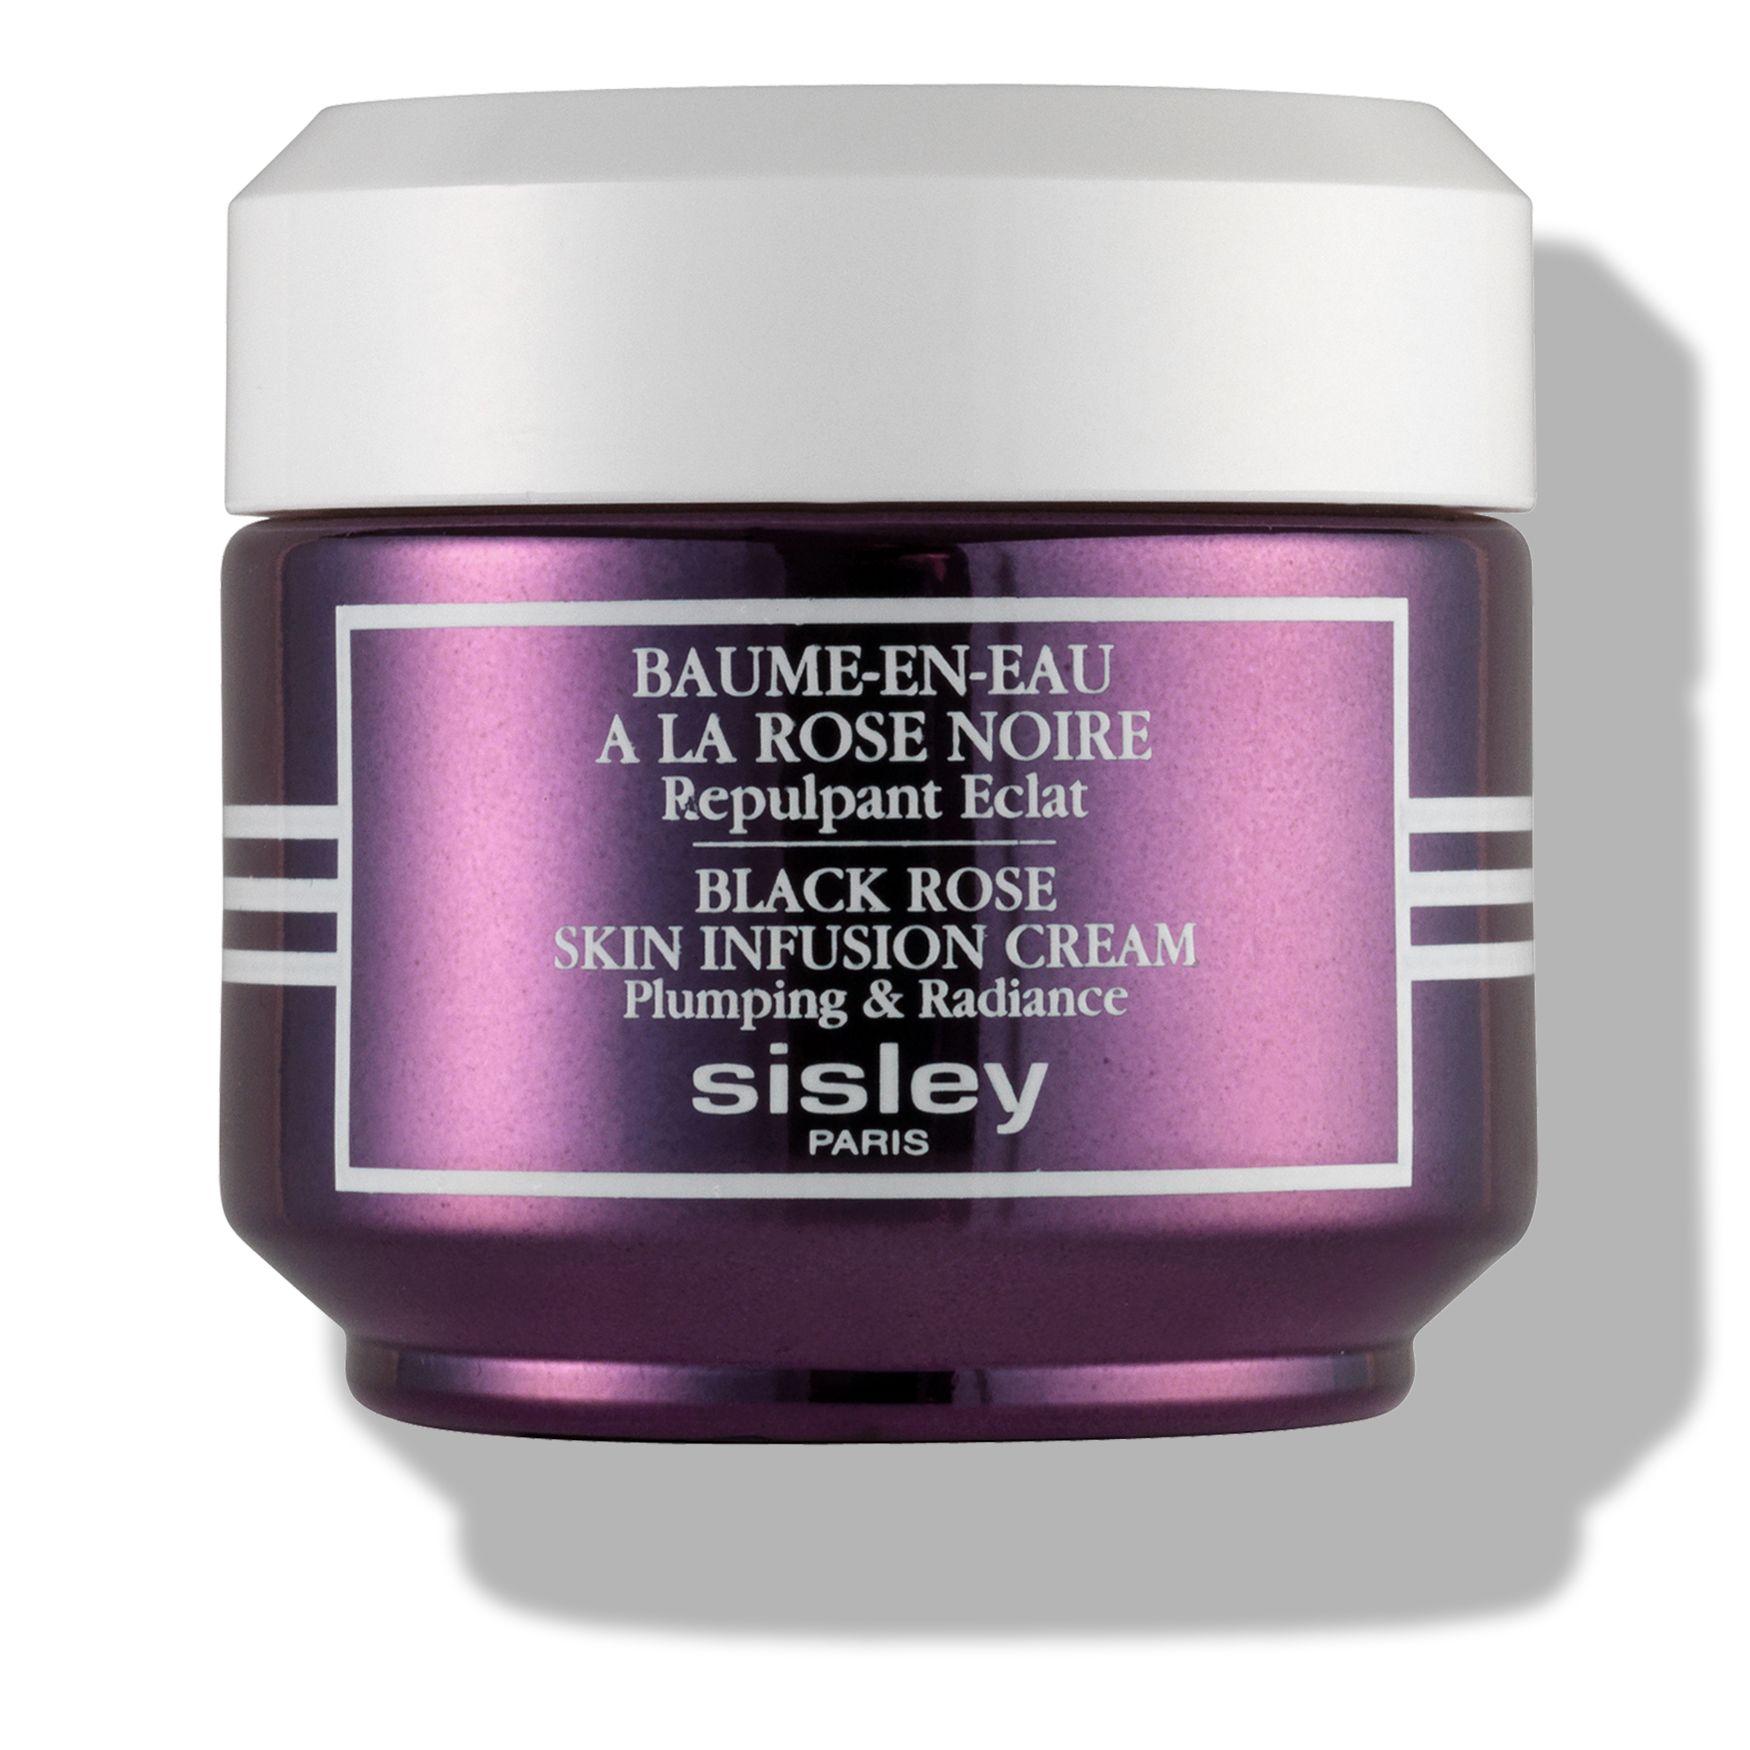 Sisley-Paris Black Rose Skin Infusion Cream | Space NK | Space NK (EU)